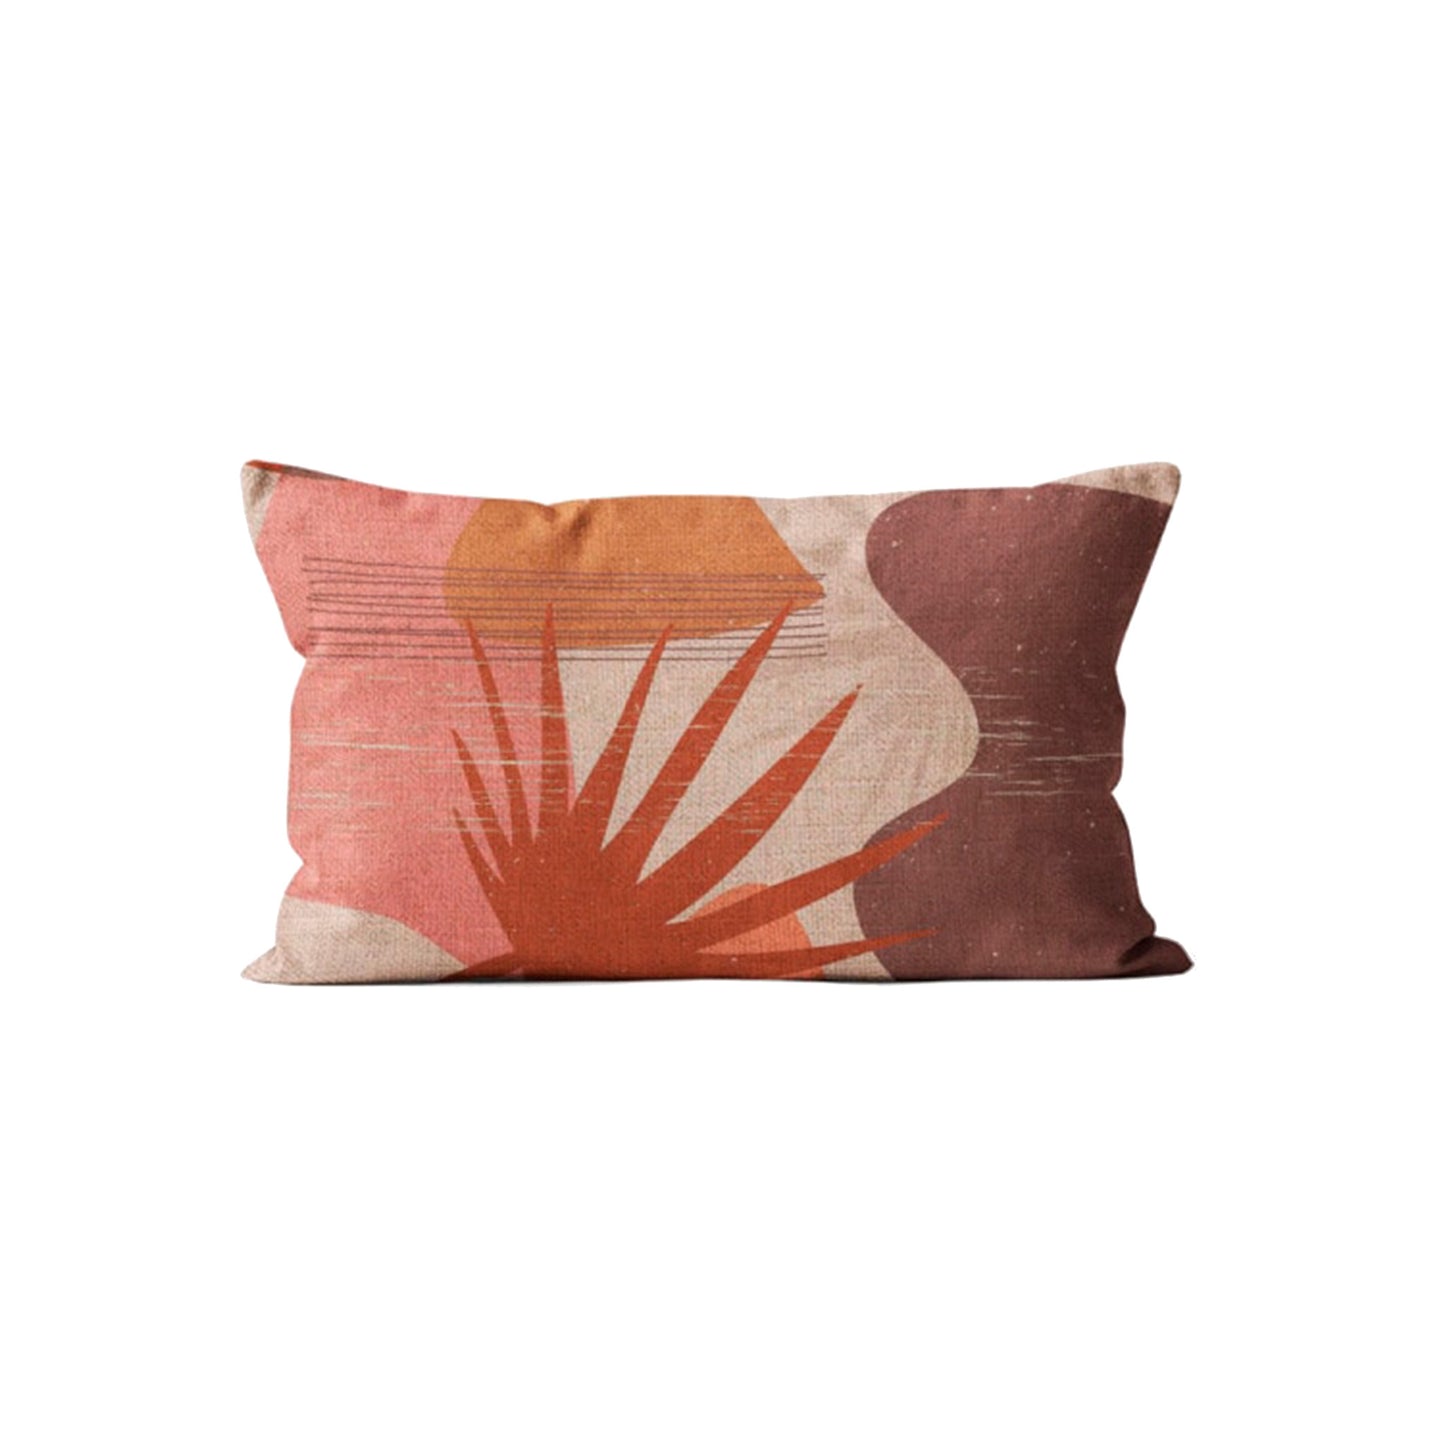 Floral Tropical Cushion Cover